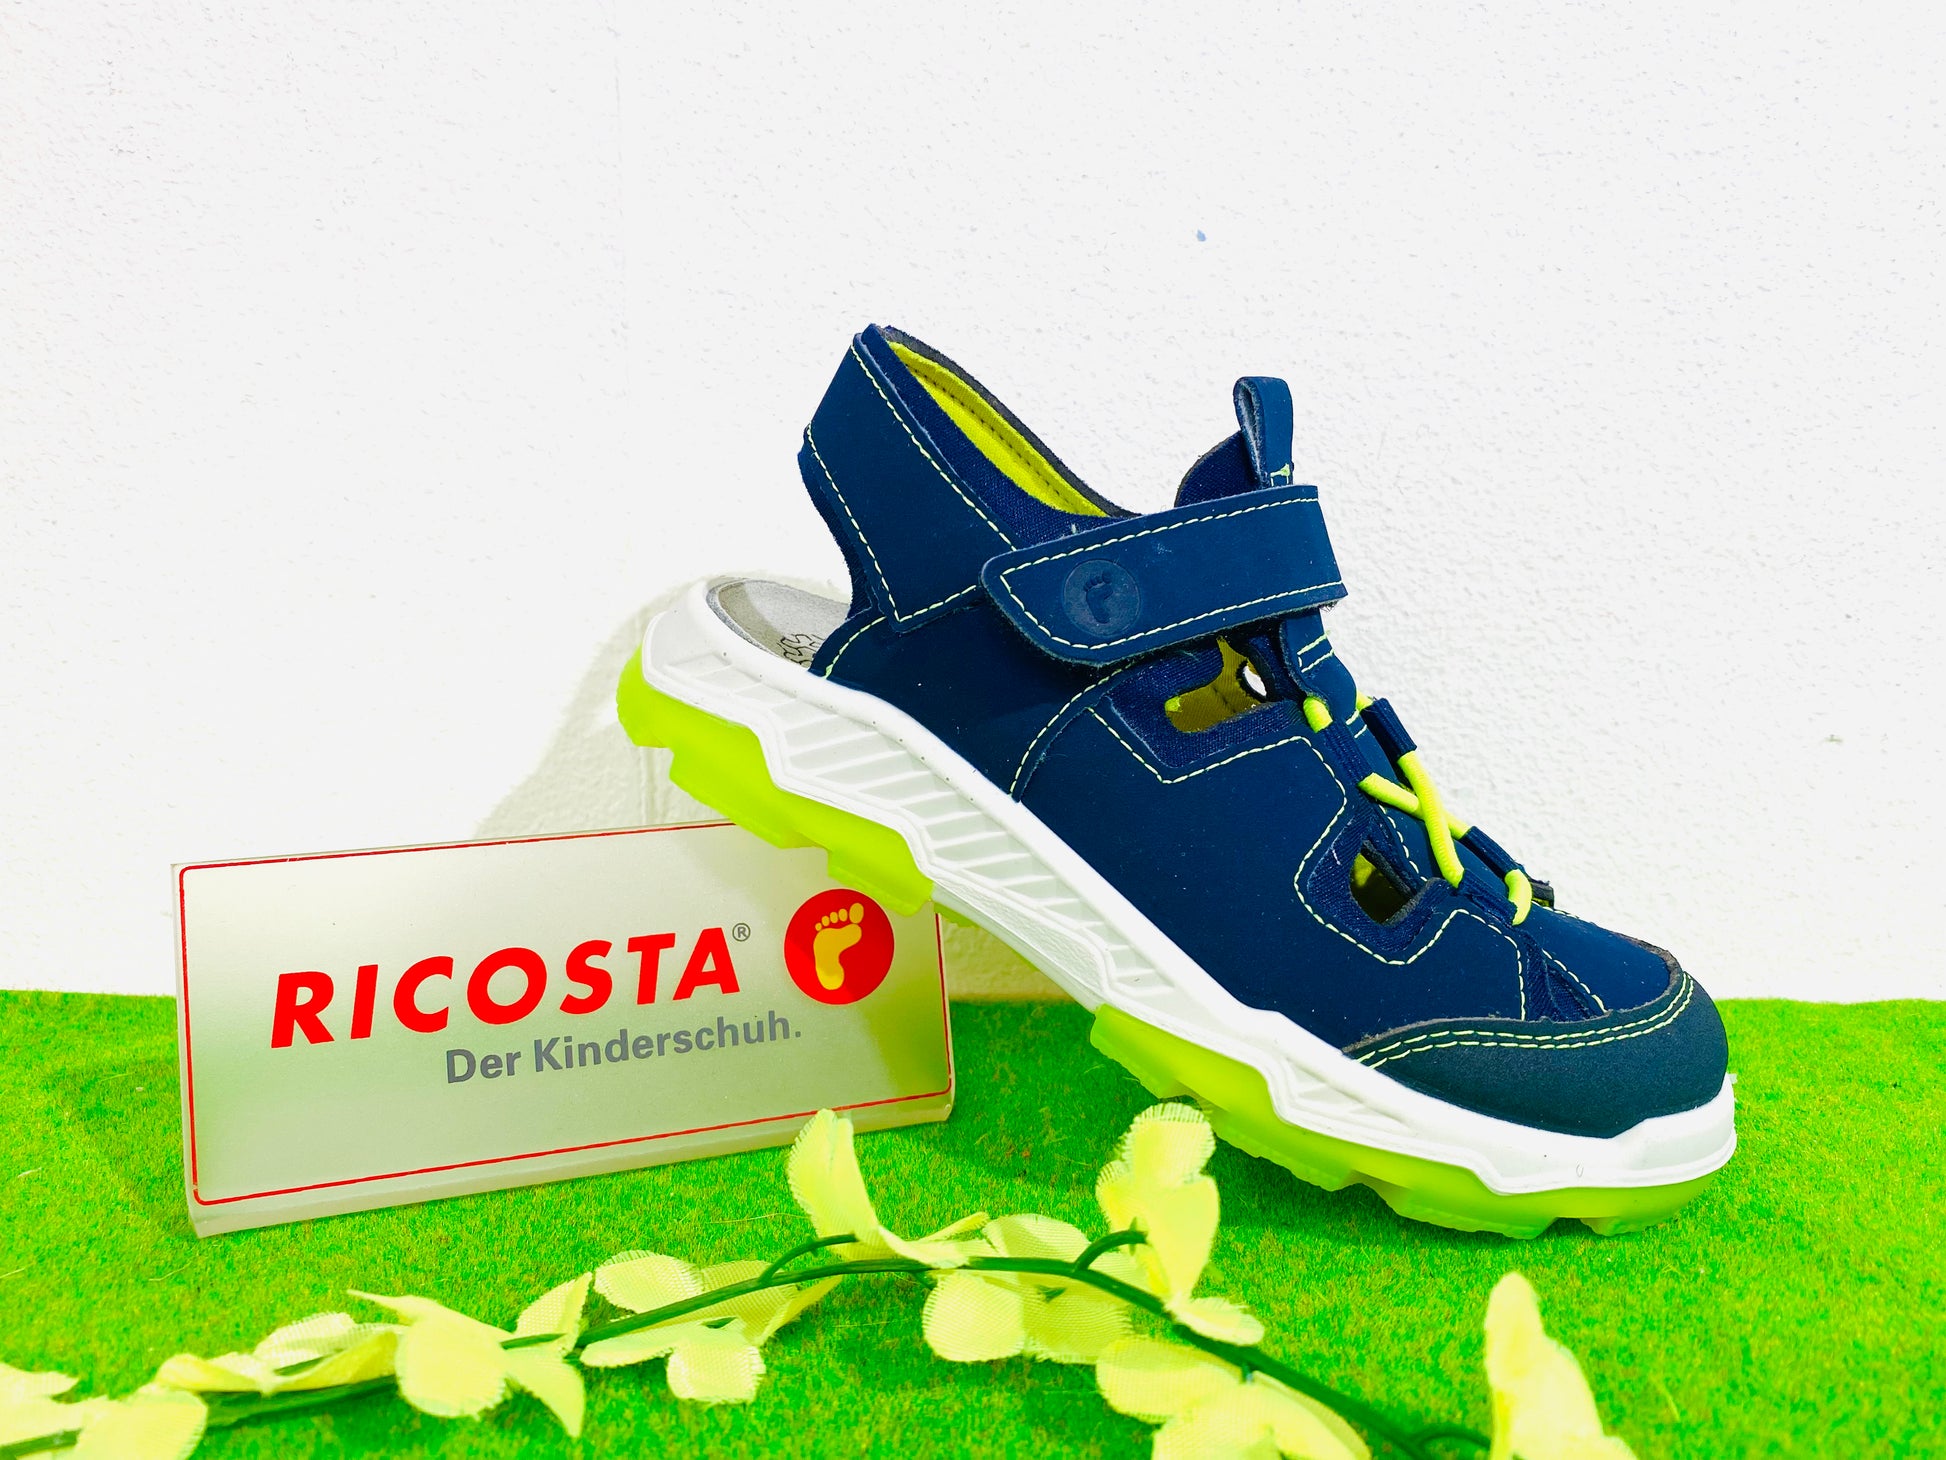 Ricosta Arizona navy sandal - Kirbys Footwear Ltd